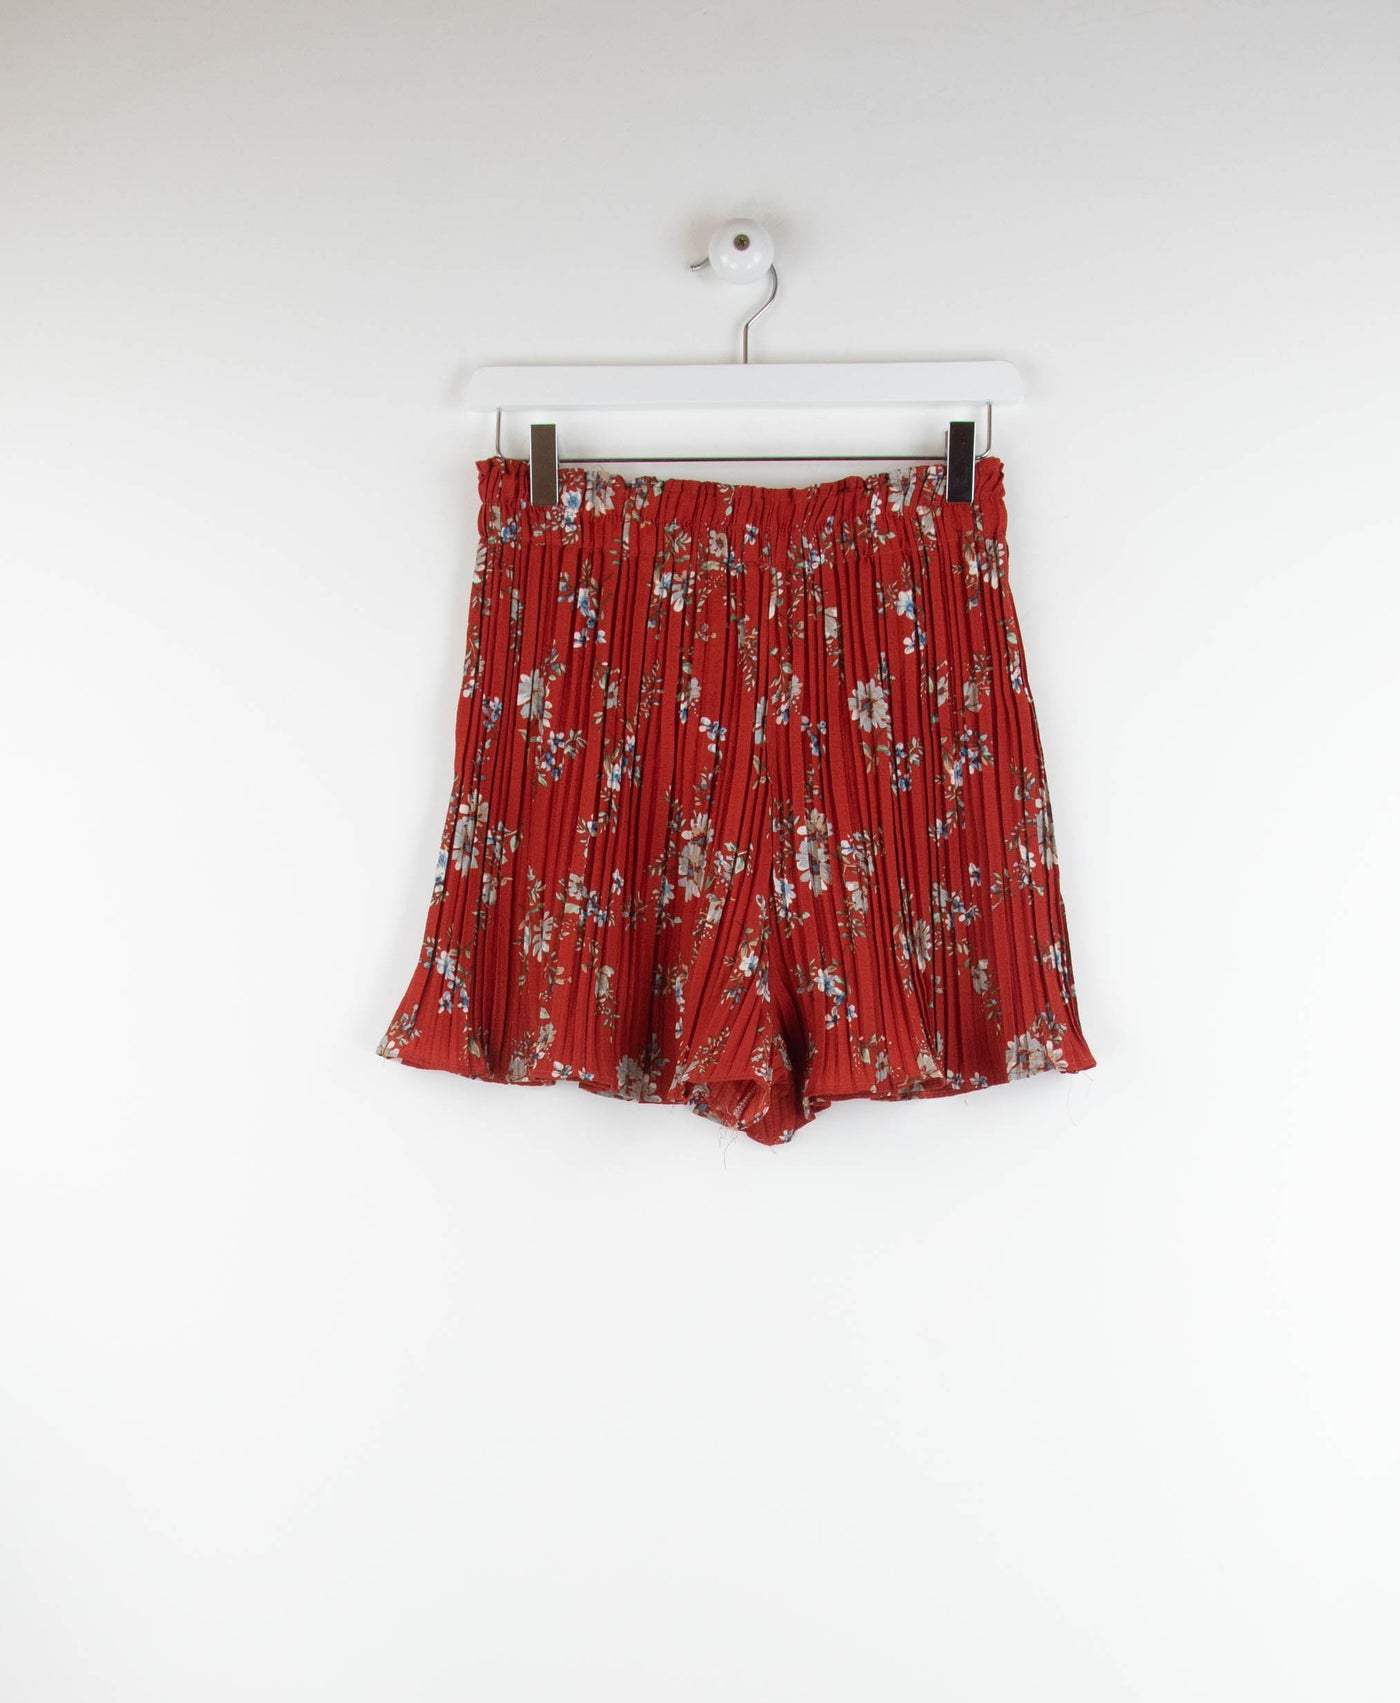 Pantalón corto drapeado rojo con estampado